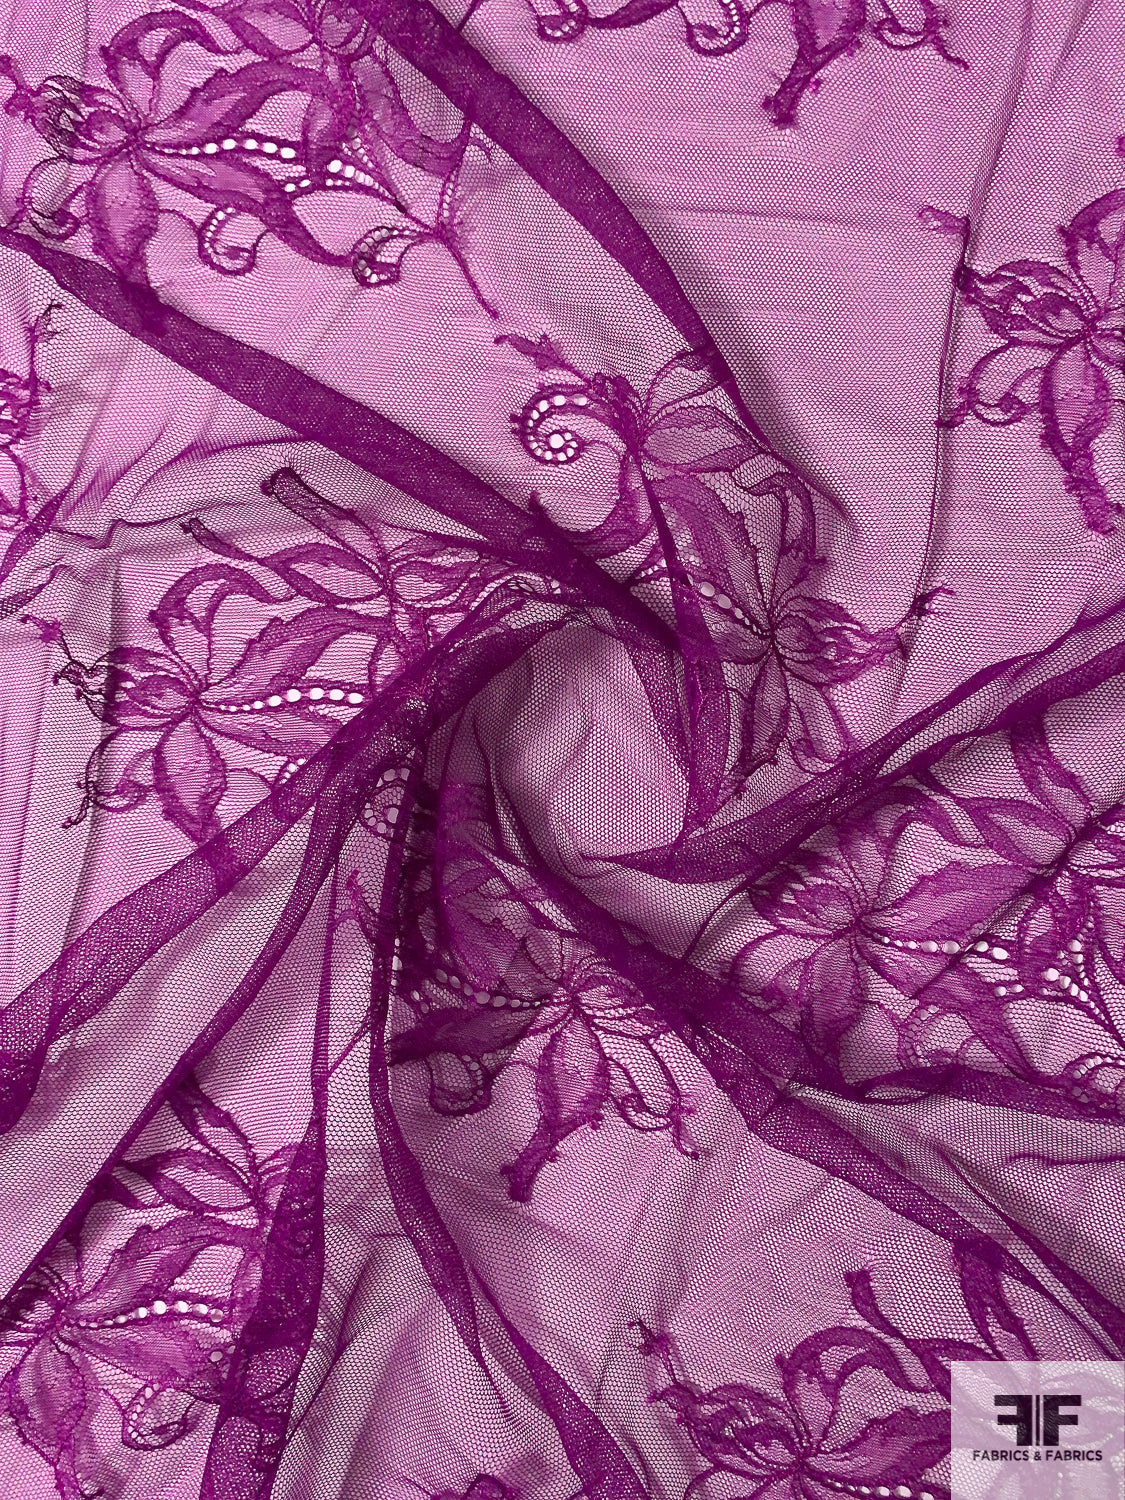 Fine Floral Double-Scalloped Leavers Lace Strip - Purple-Magenta